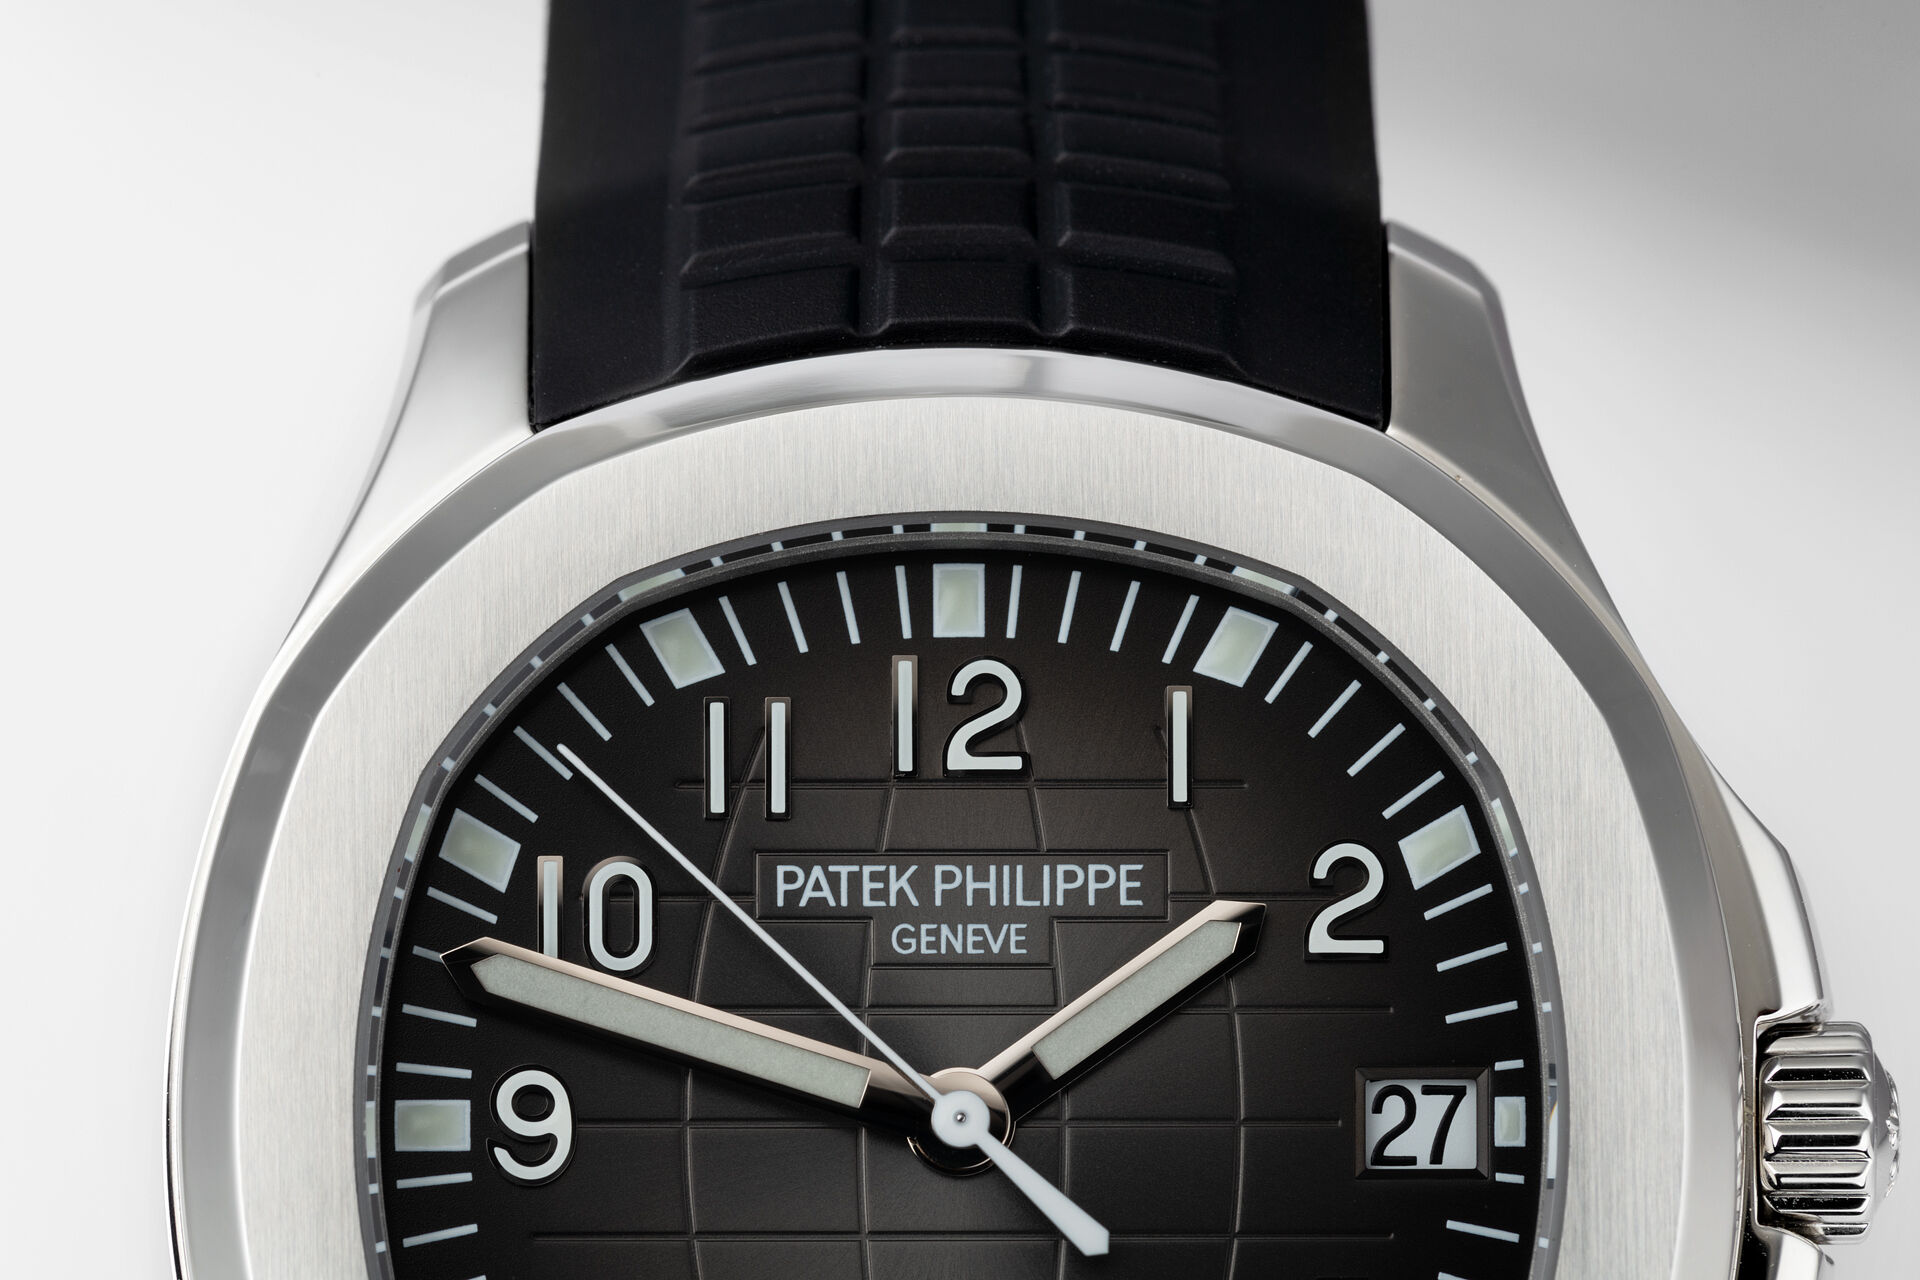 ref 5167A-001 | 'Brand New' Patek Warranty | Patek Philippe Aquanaut